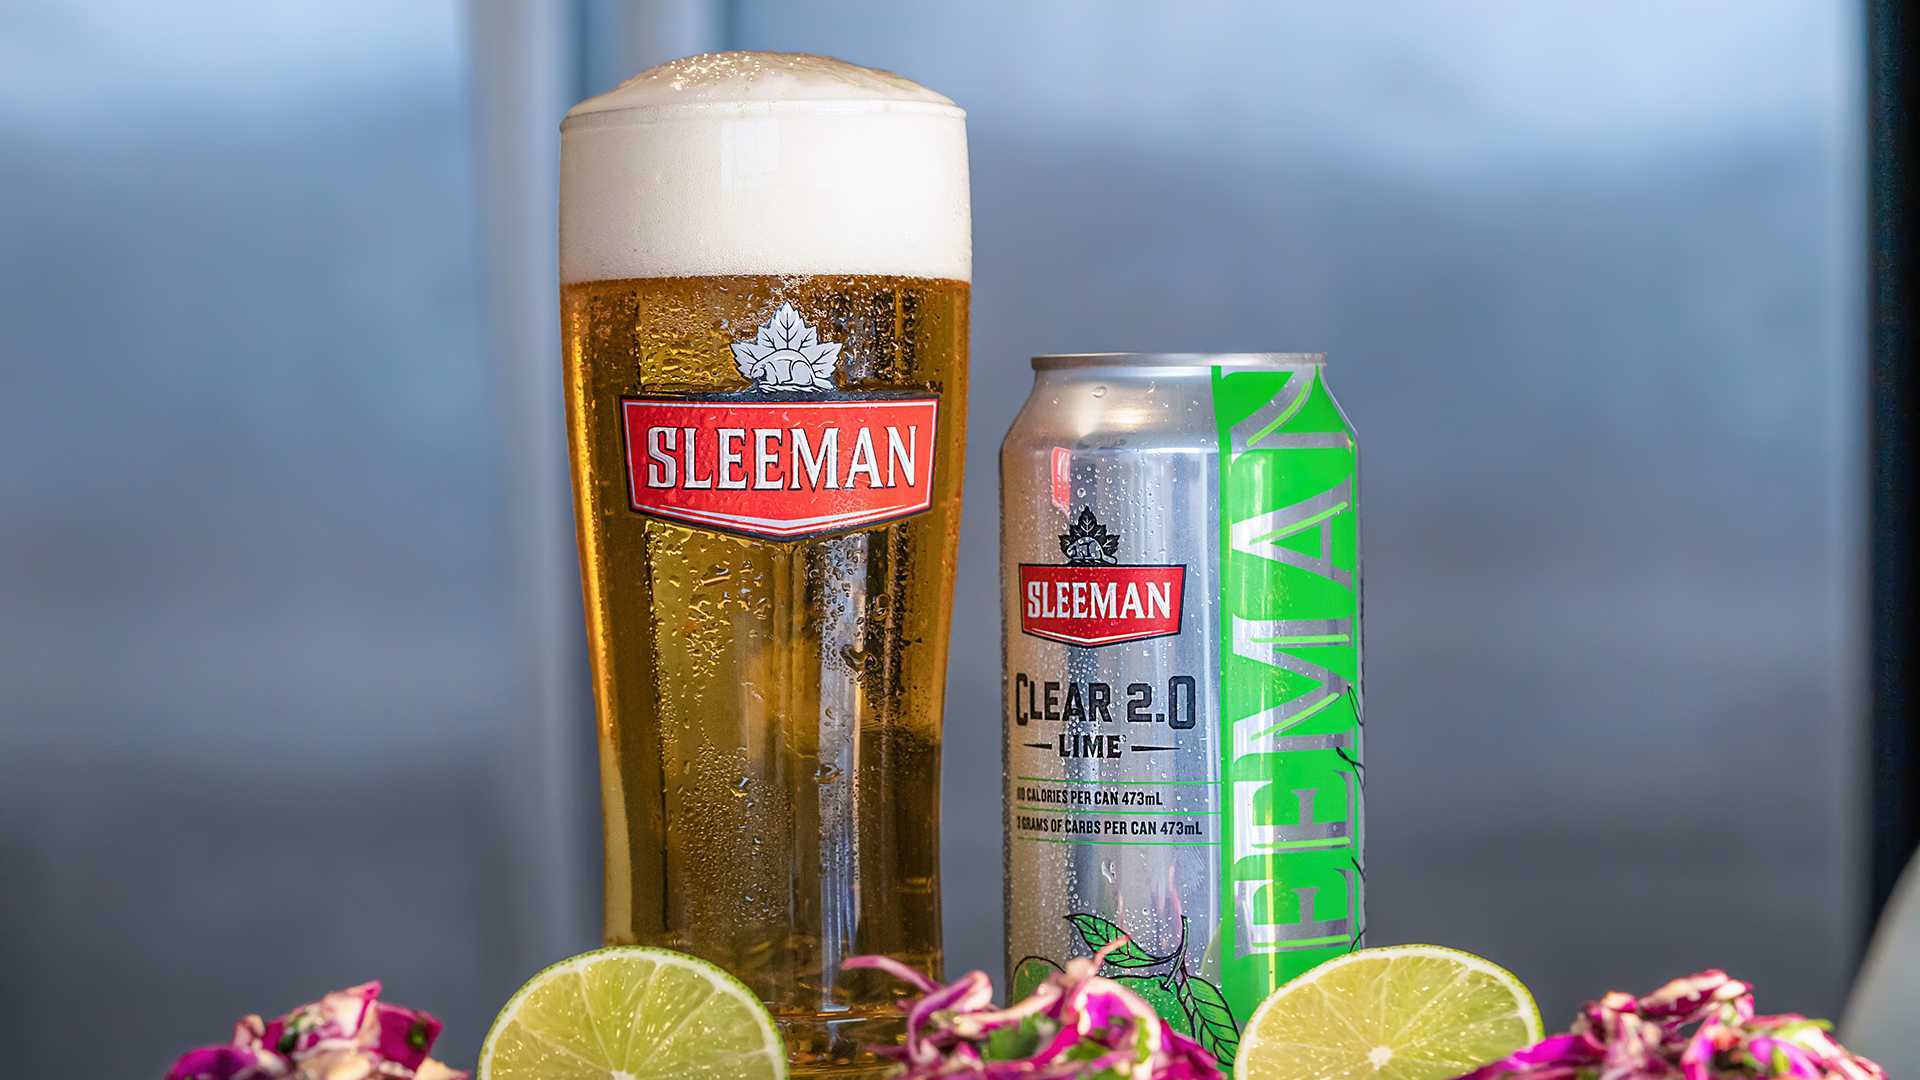 Sleeman Clear 2.0 | Sleeman Lime